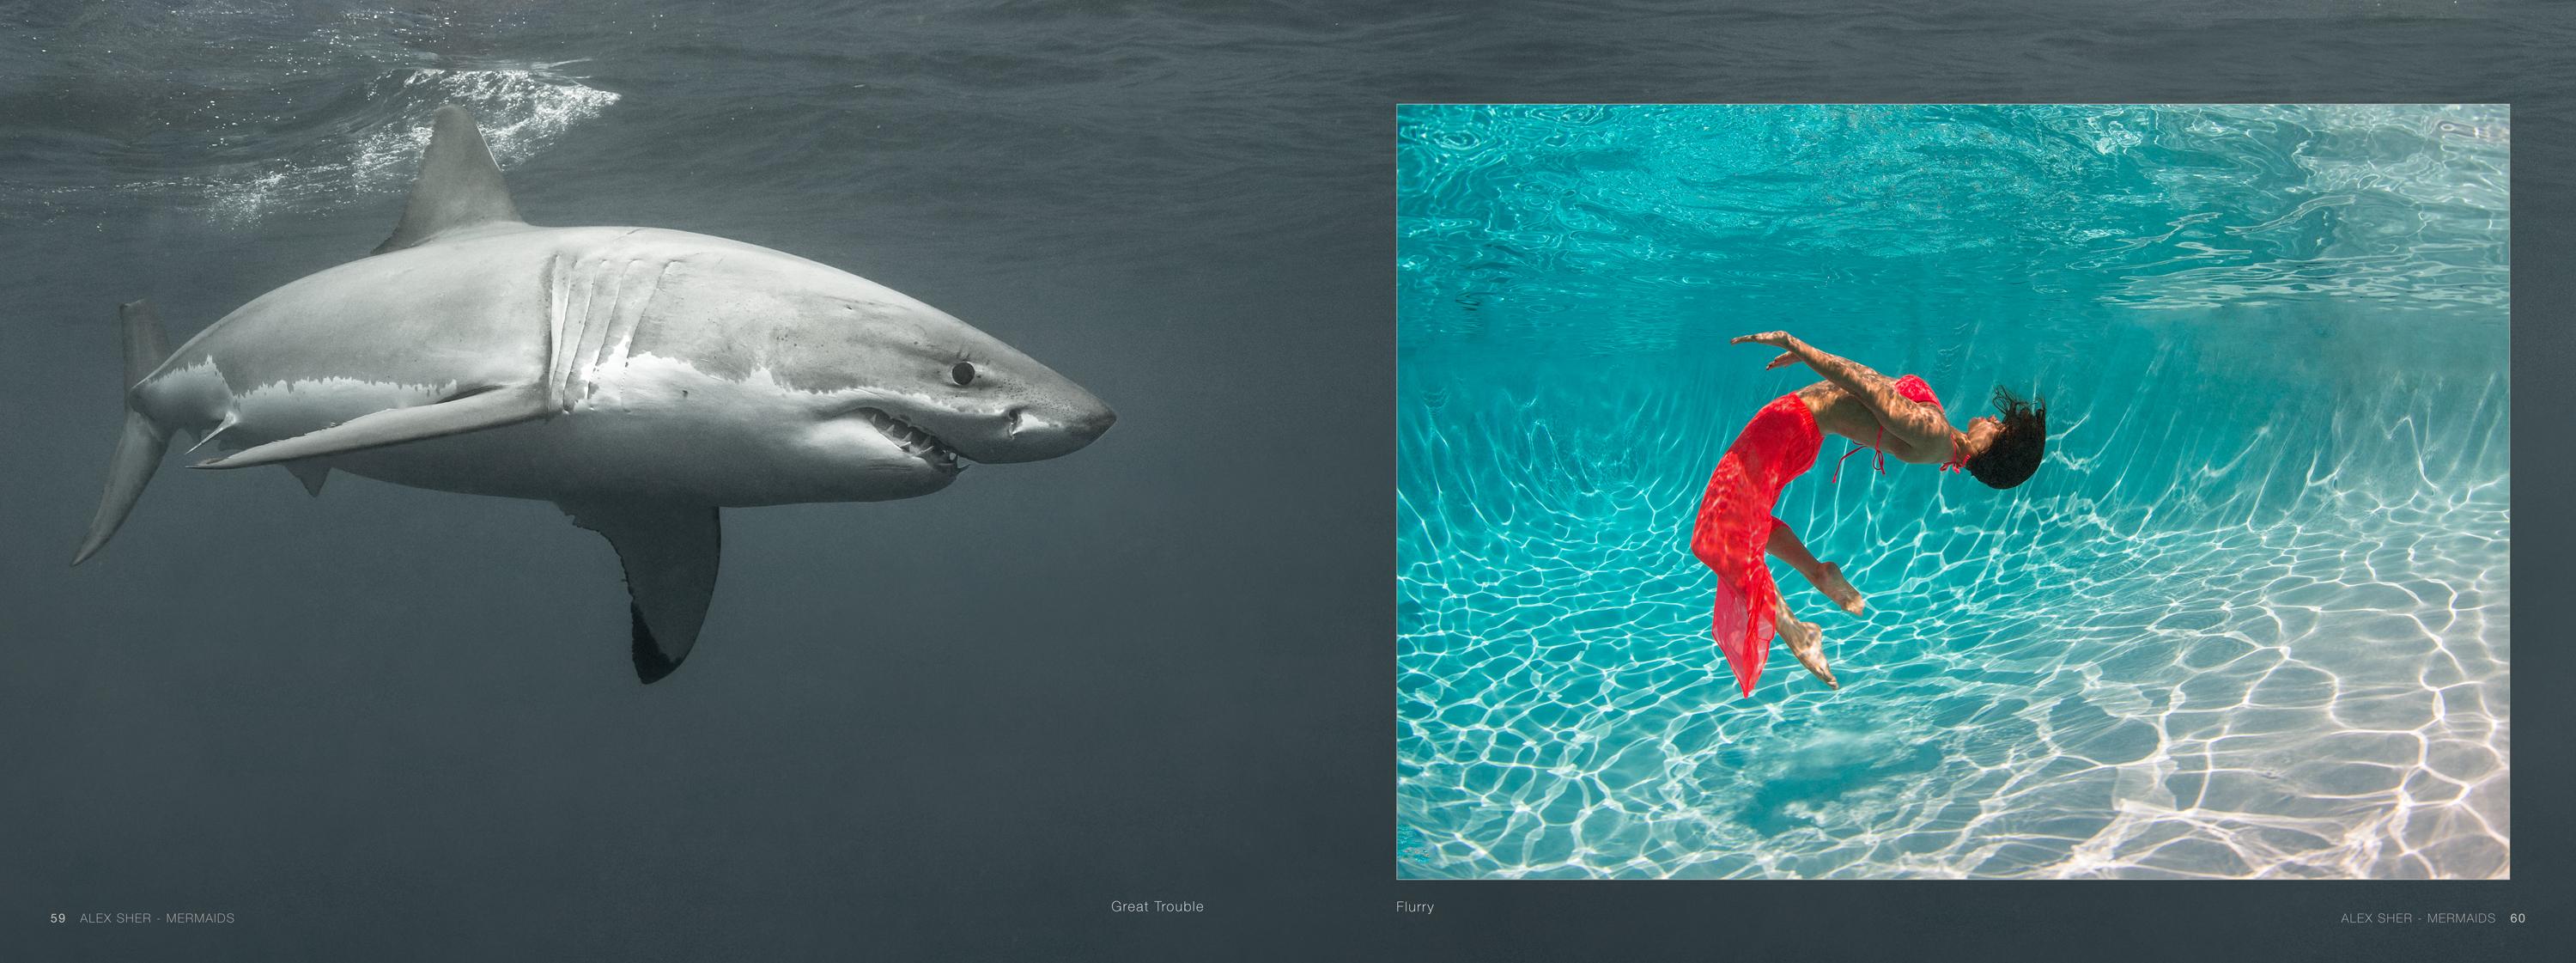 Mermaids -  a book of underwater nude and ocean wildlife photographs 11